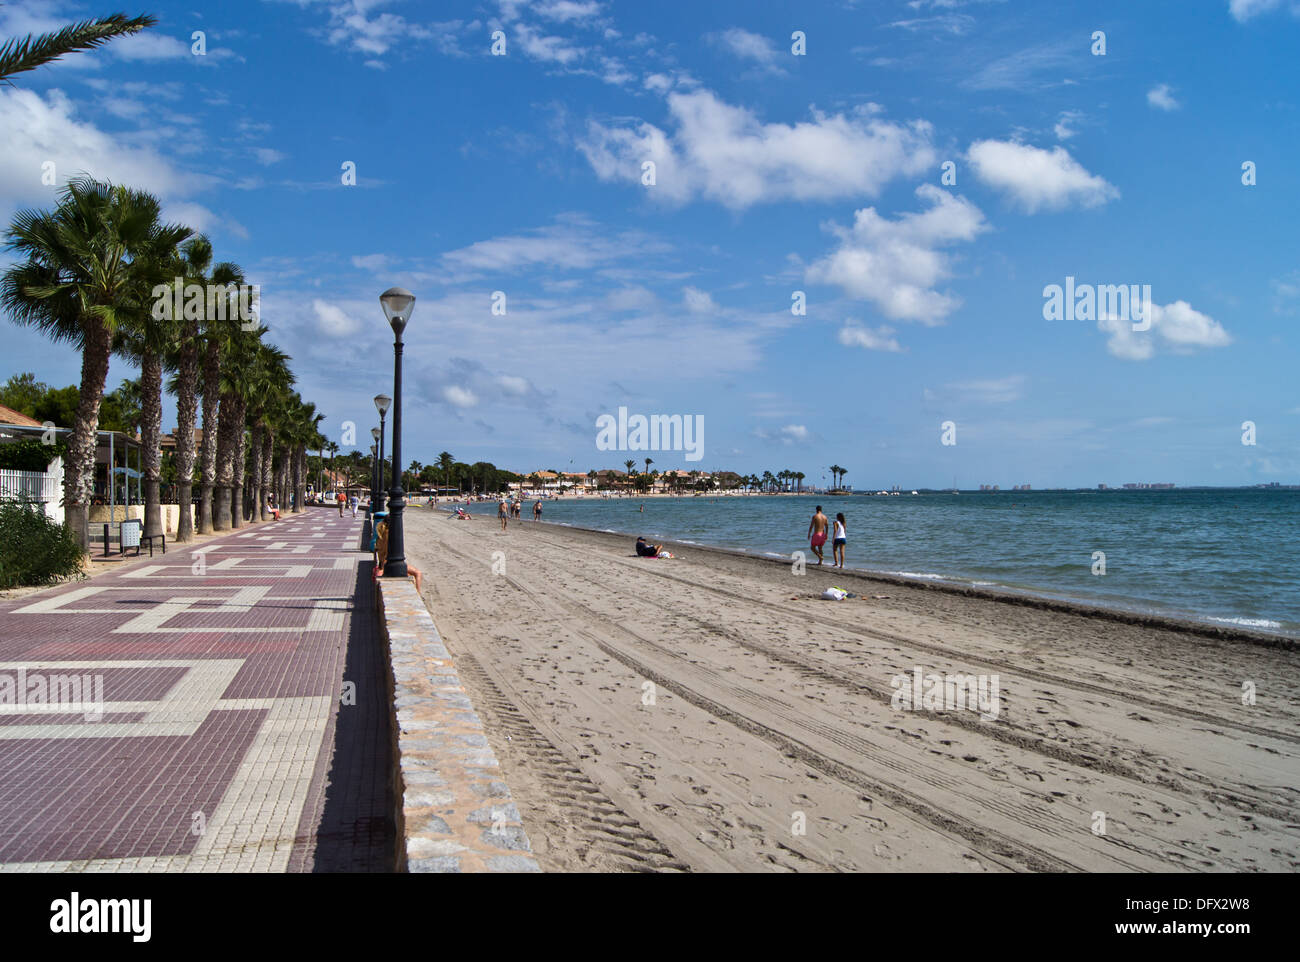 Tourist and locals on the beach in Los Alcazares Murcia Spain mar menor Stock Photo